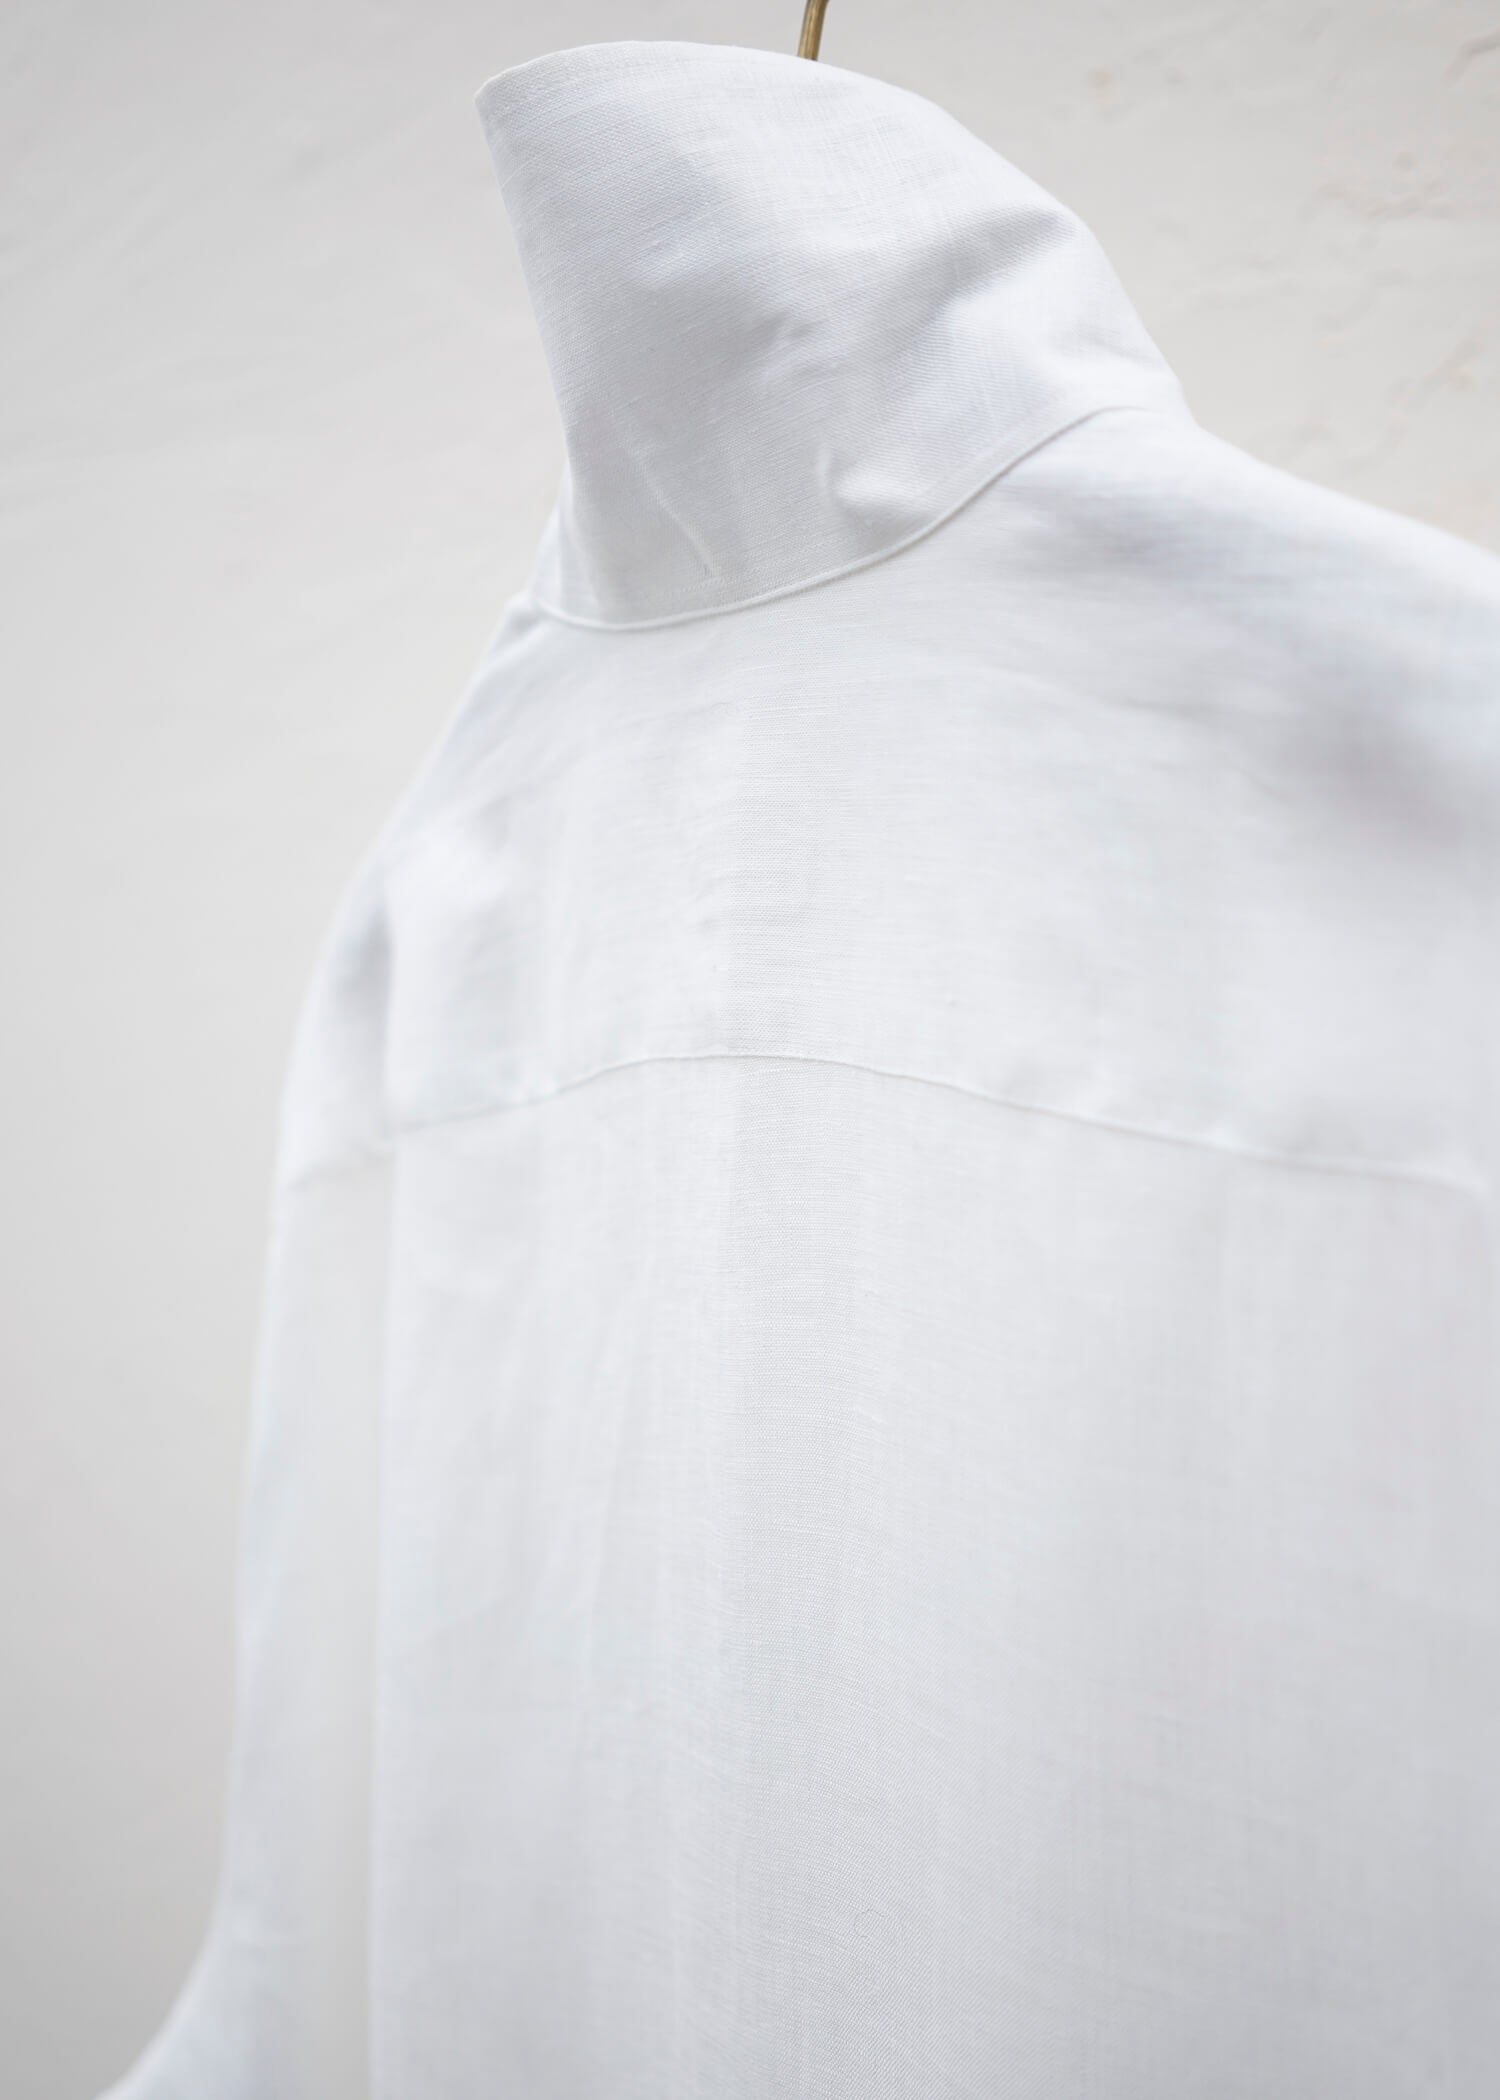 ZIIIN "OSCAR" 高领衬衫 / 白色